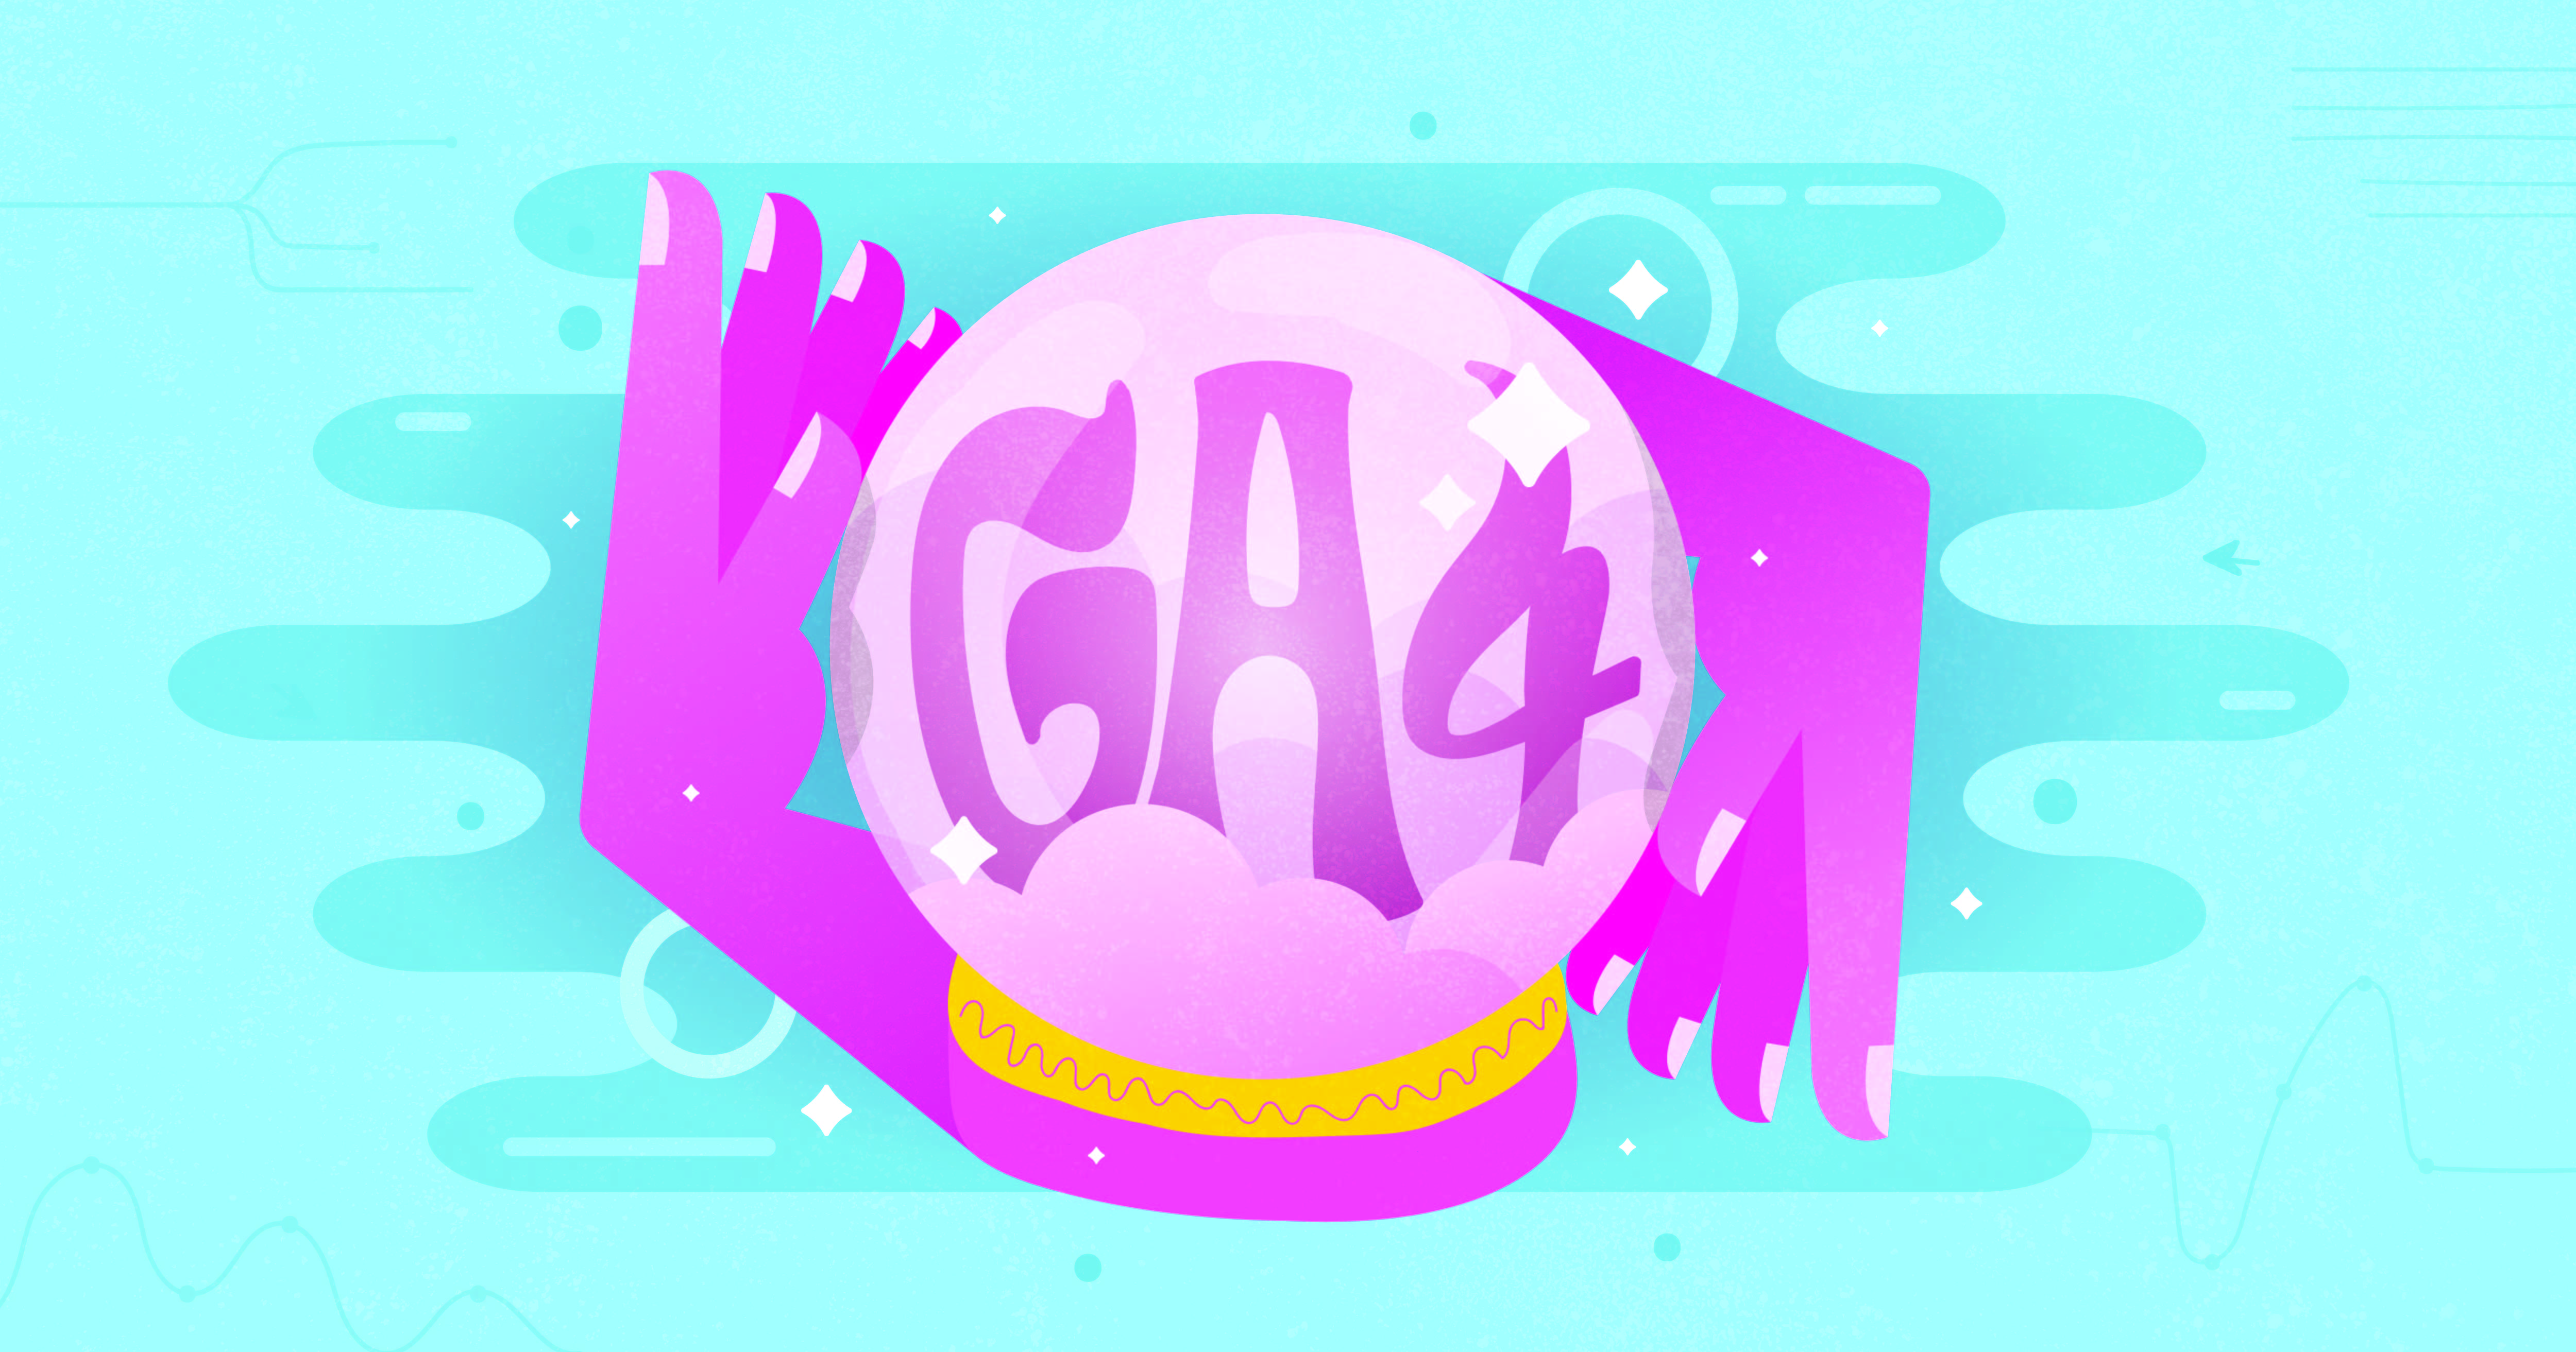 Crystal ball that reads GA4.